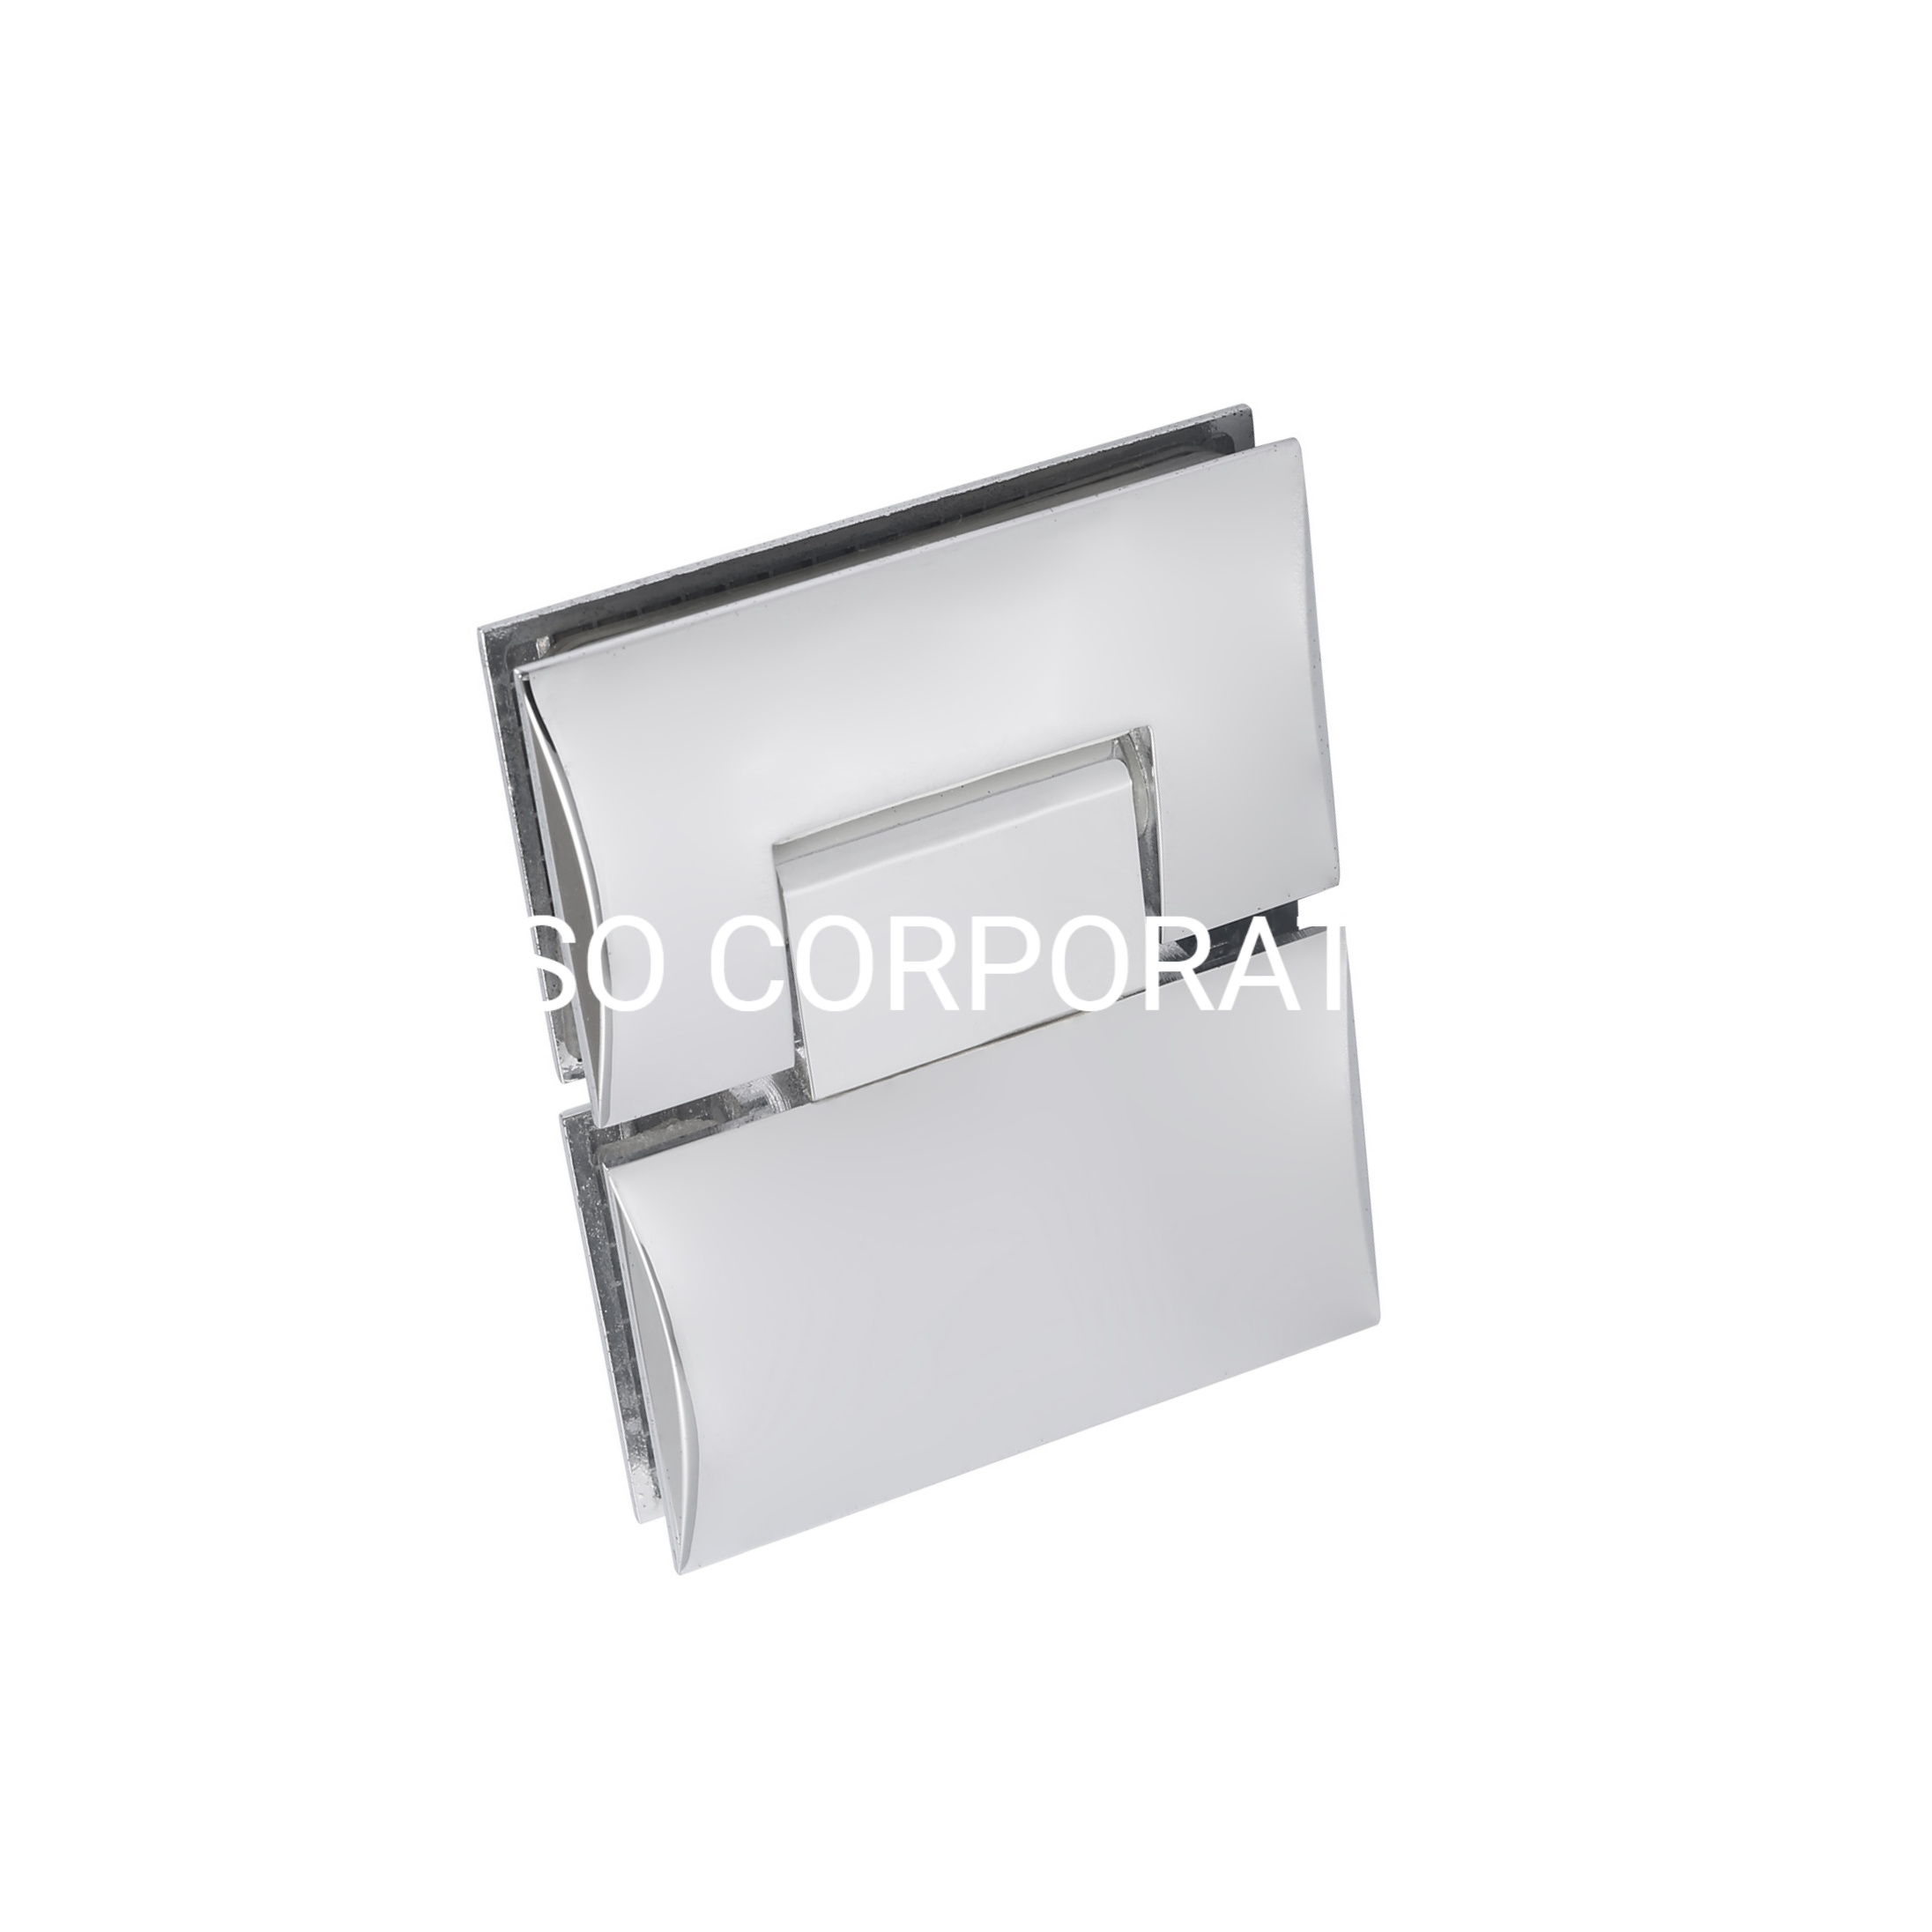 Metal Glass To Glass 180 Degree Sanitary Ware Hardware Brass Bathroom Hinge Glass Clamp